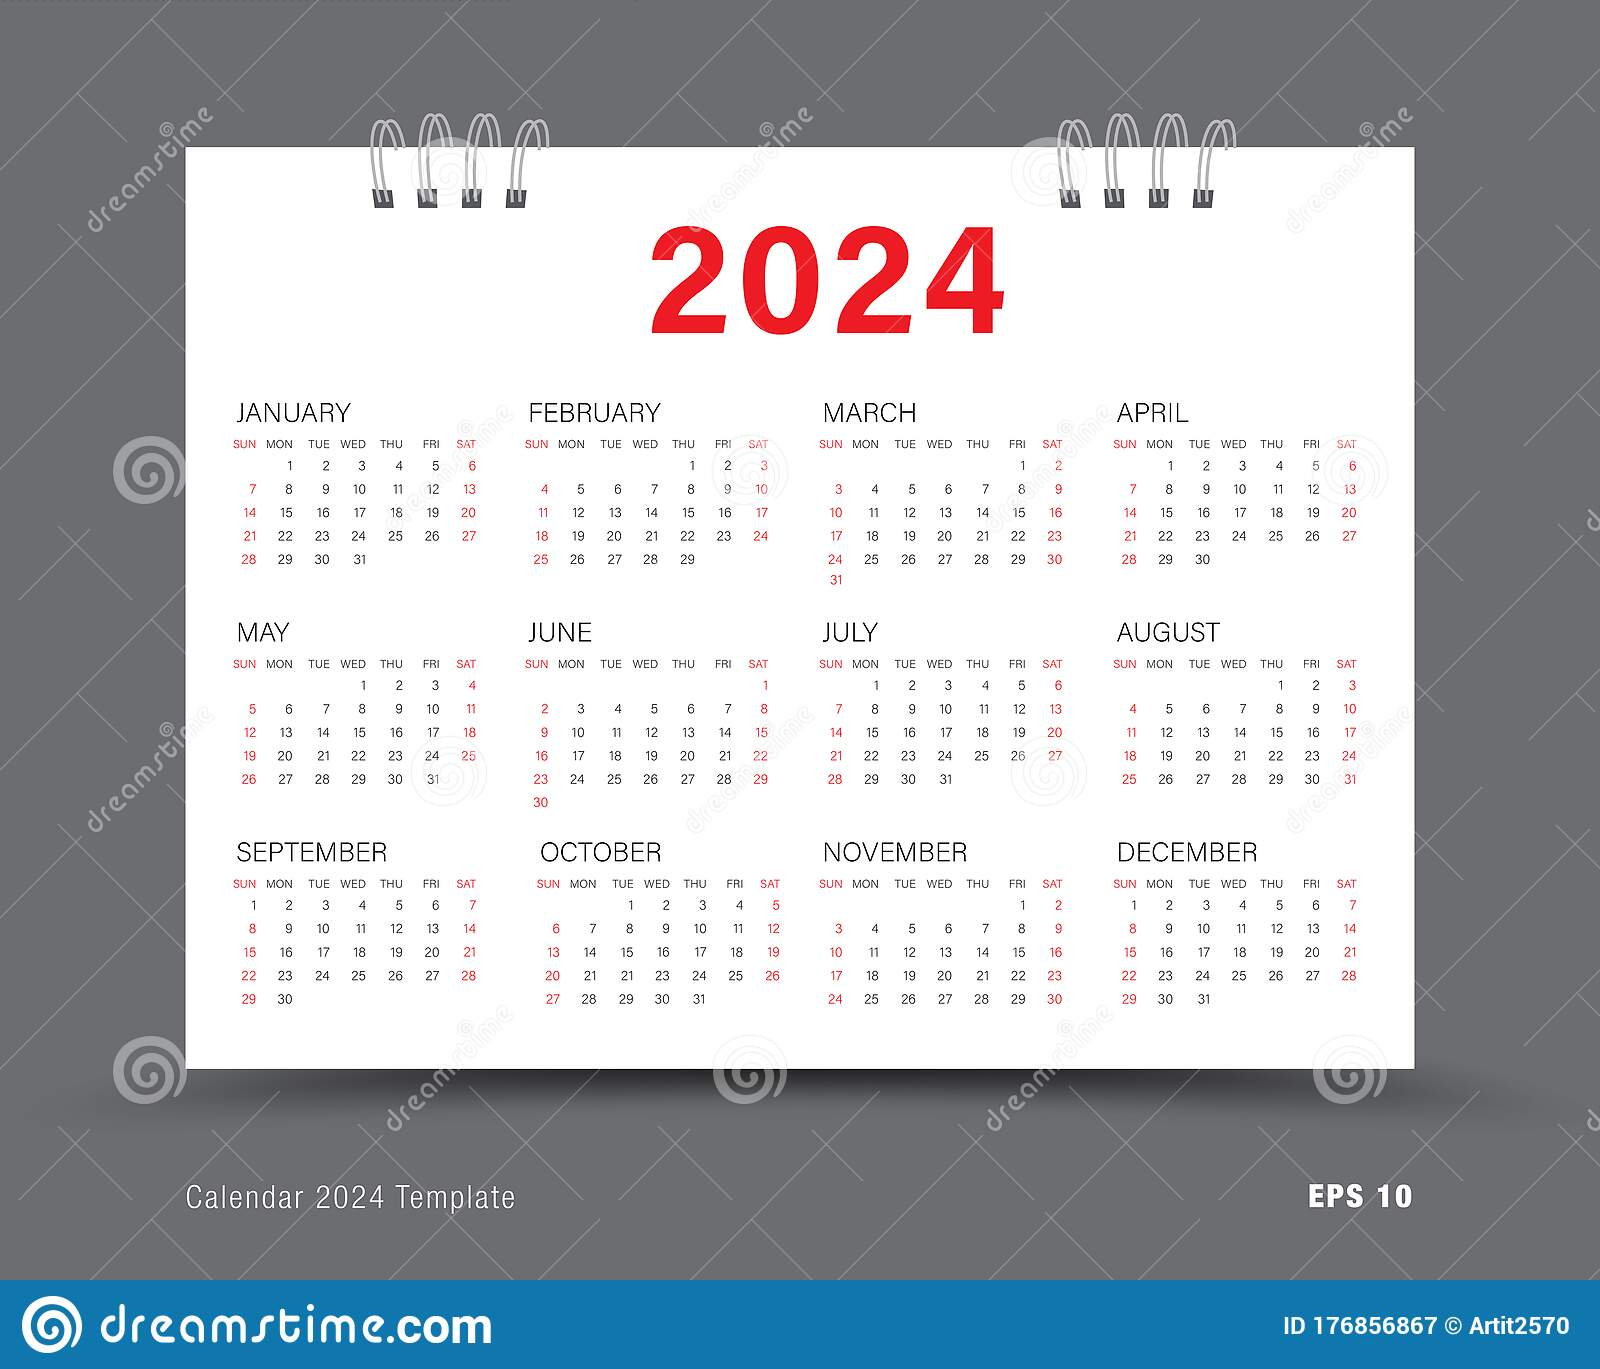 printable-5x7-2024-calendar-calendar-2024